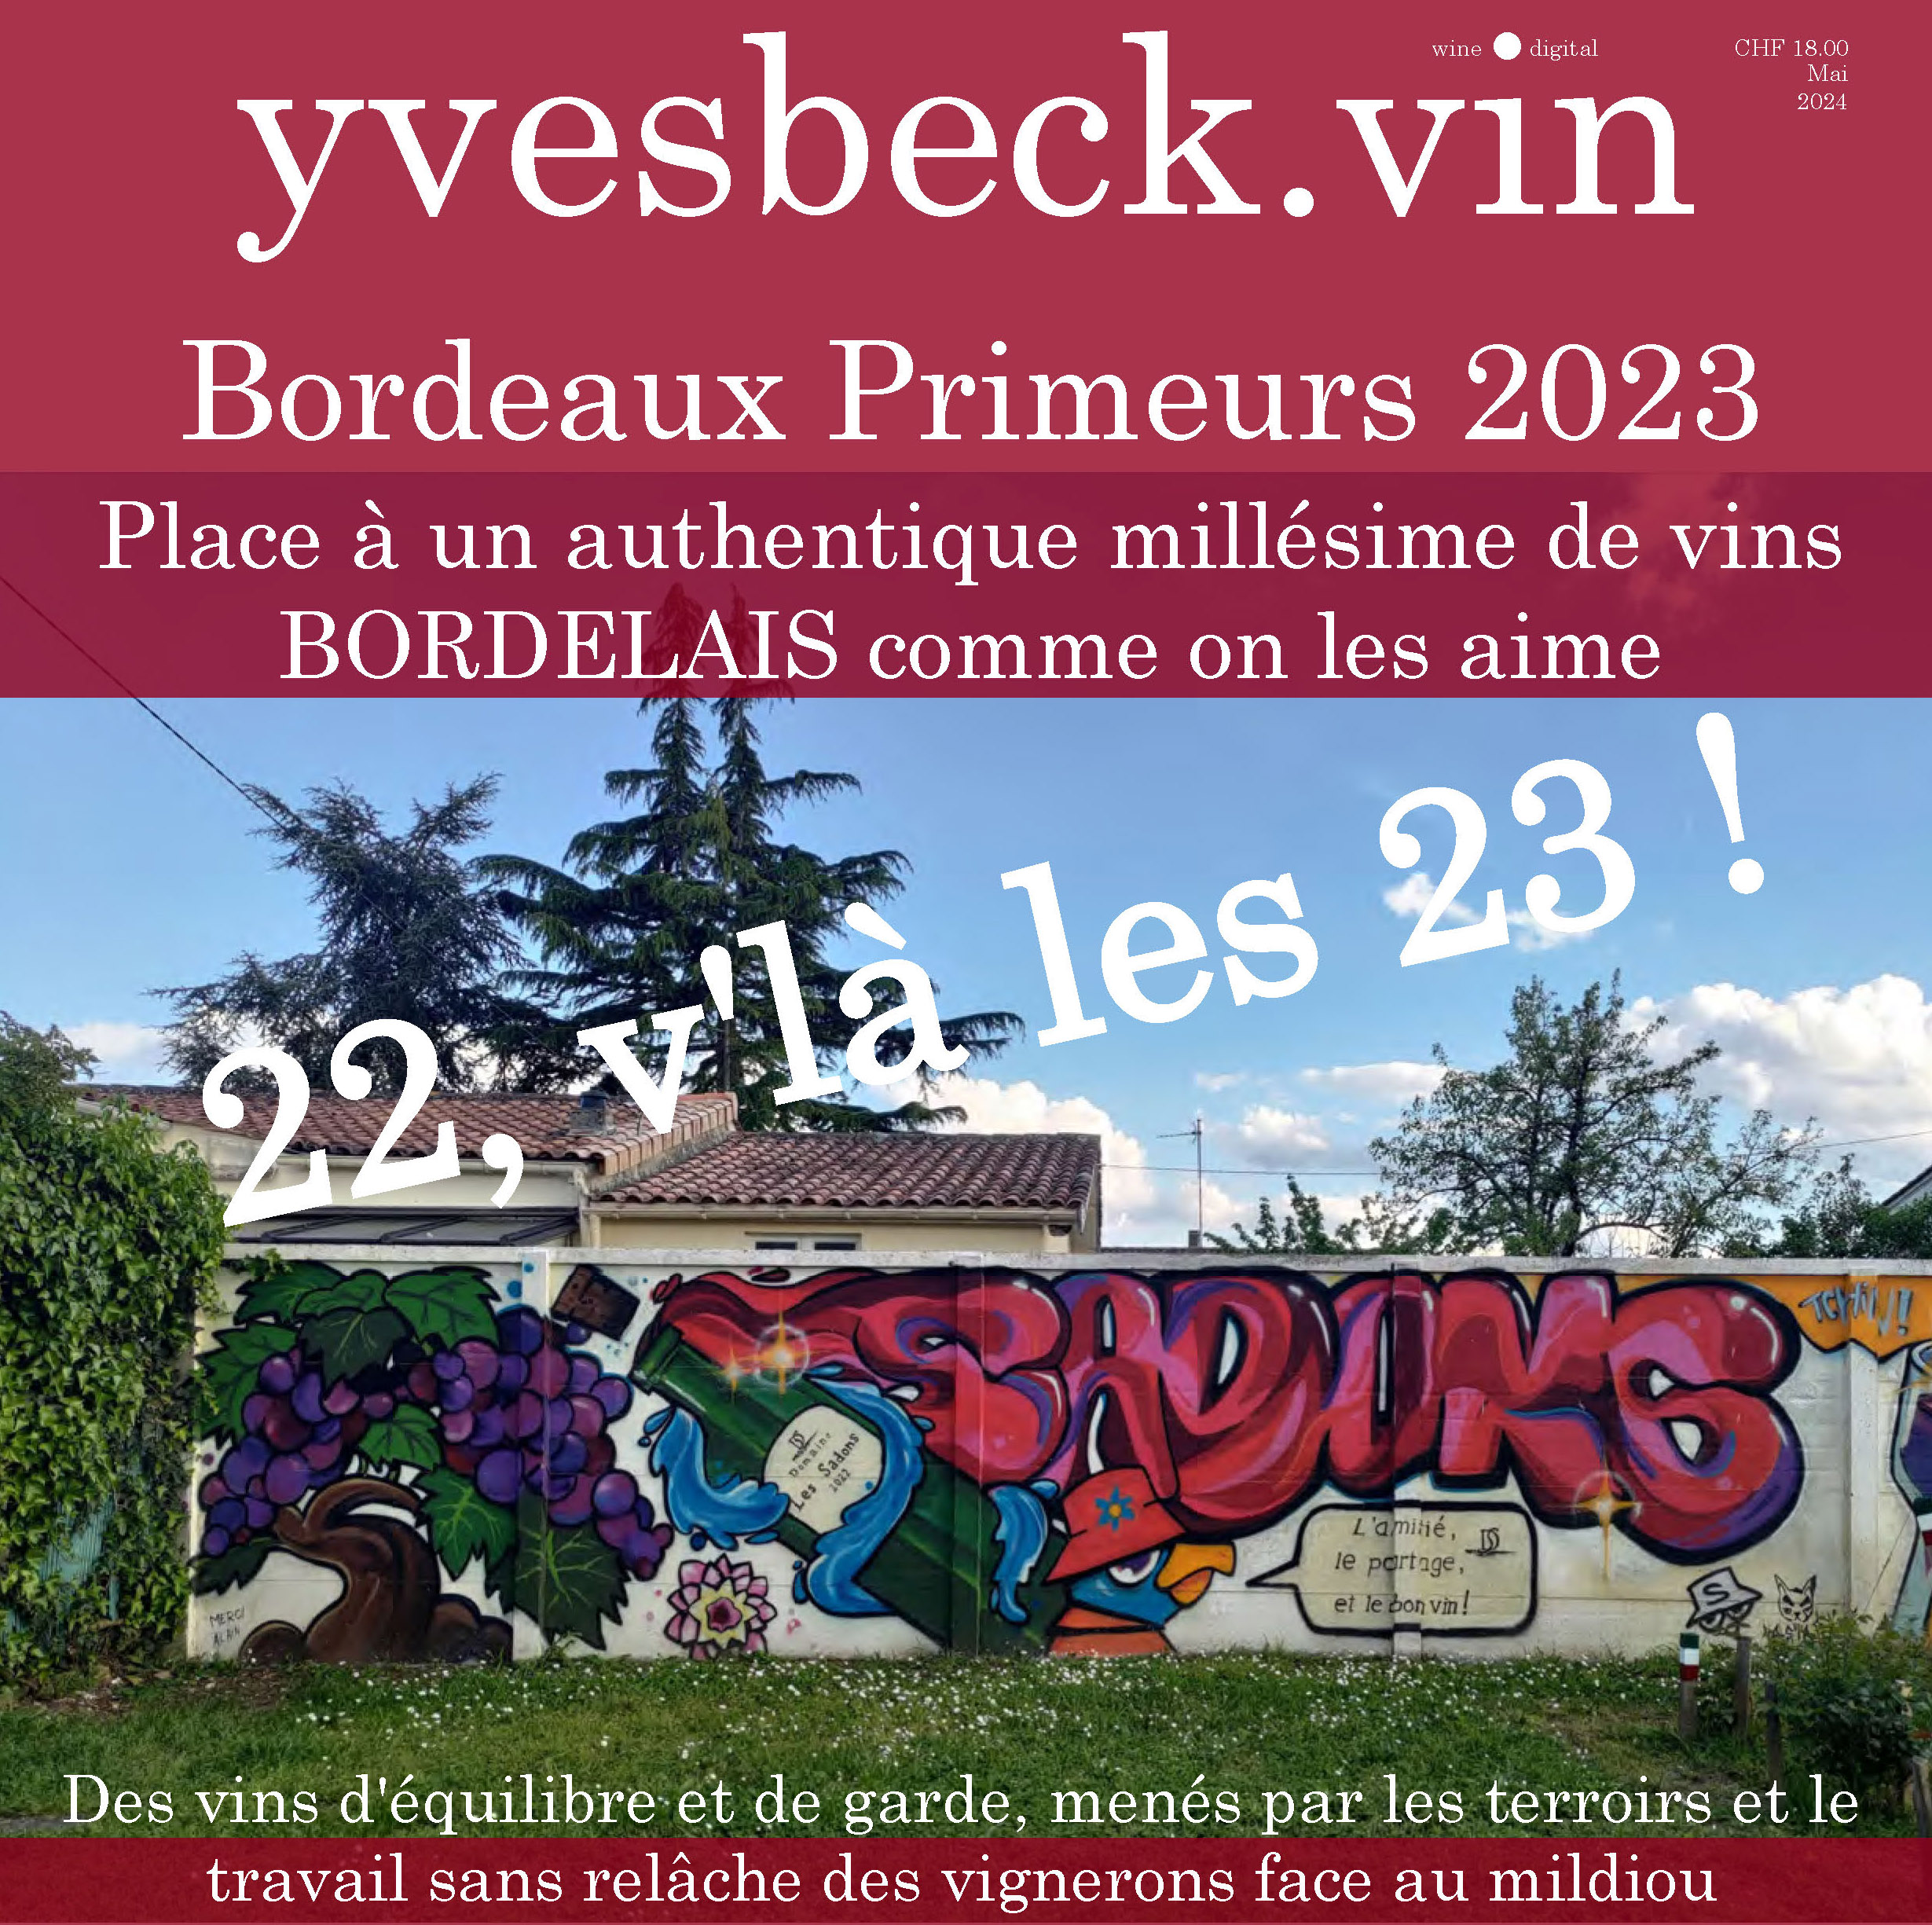 Bordeaux 2023 Primeurs - yvesbeck.wine